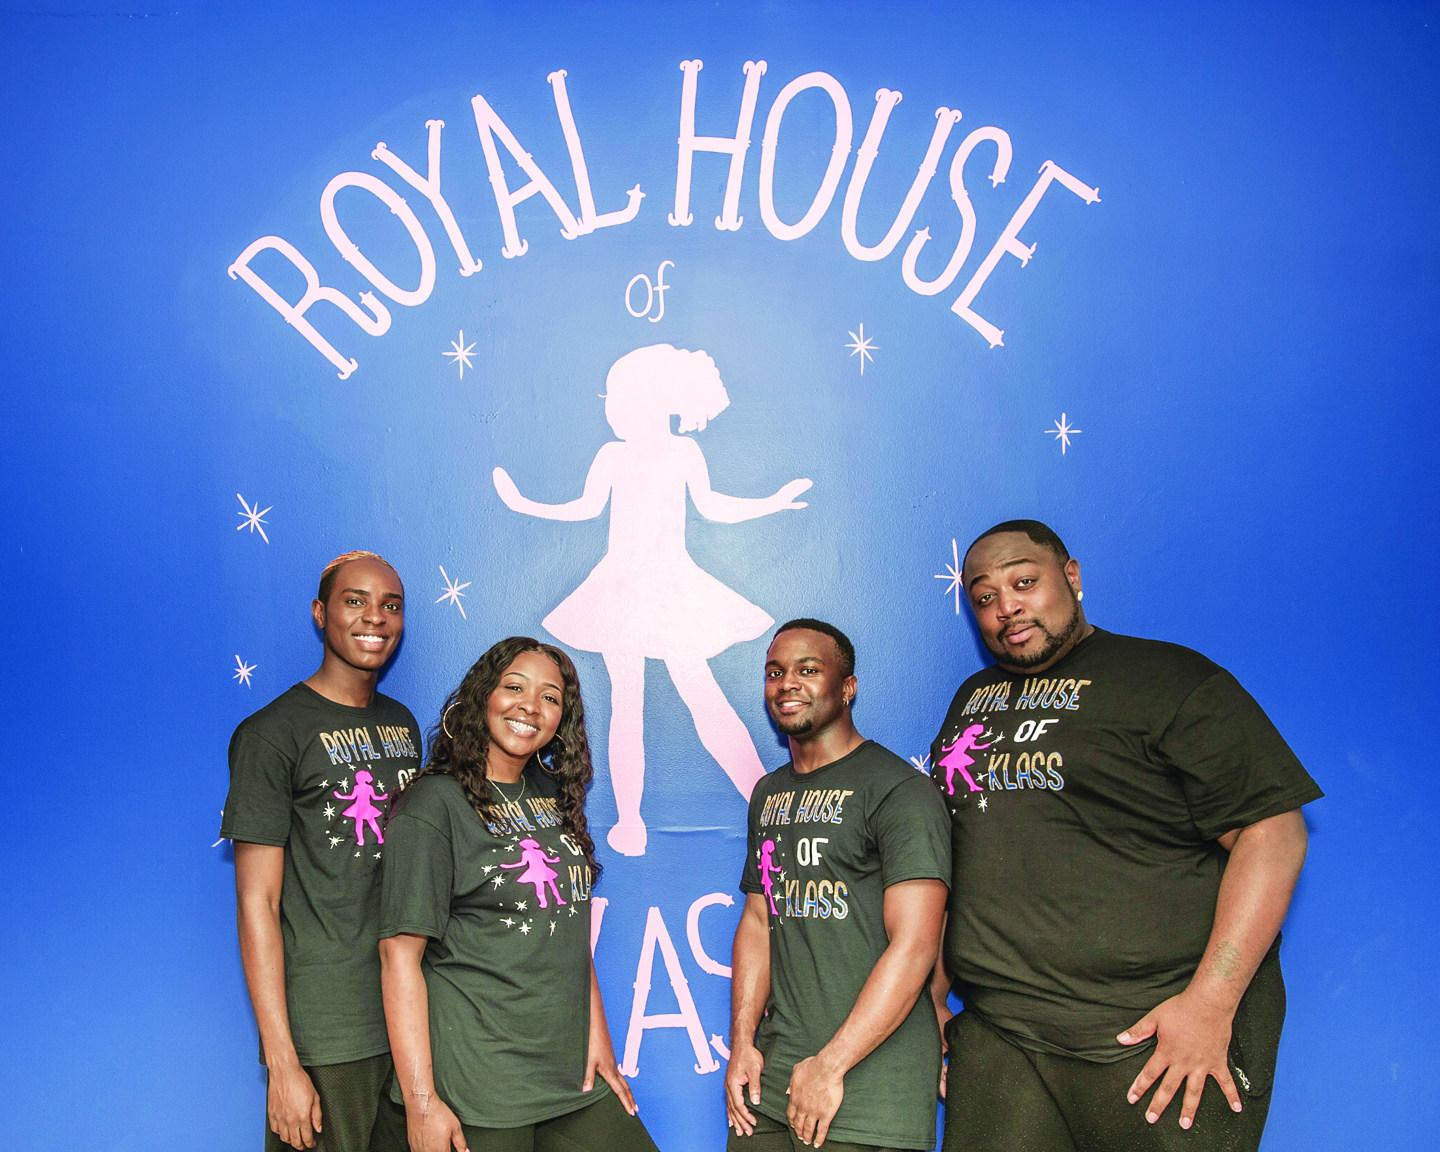 Tyesha Hart opens ‘Opelika’s Royal House of Klass Dance Studio’ in memory of daughter Mykala and her cousin Jonathan Bowen